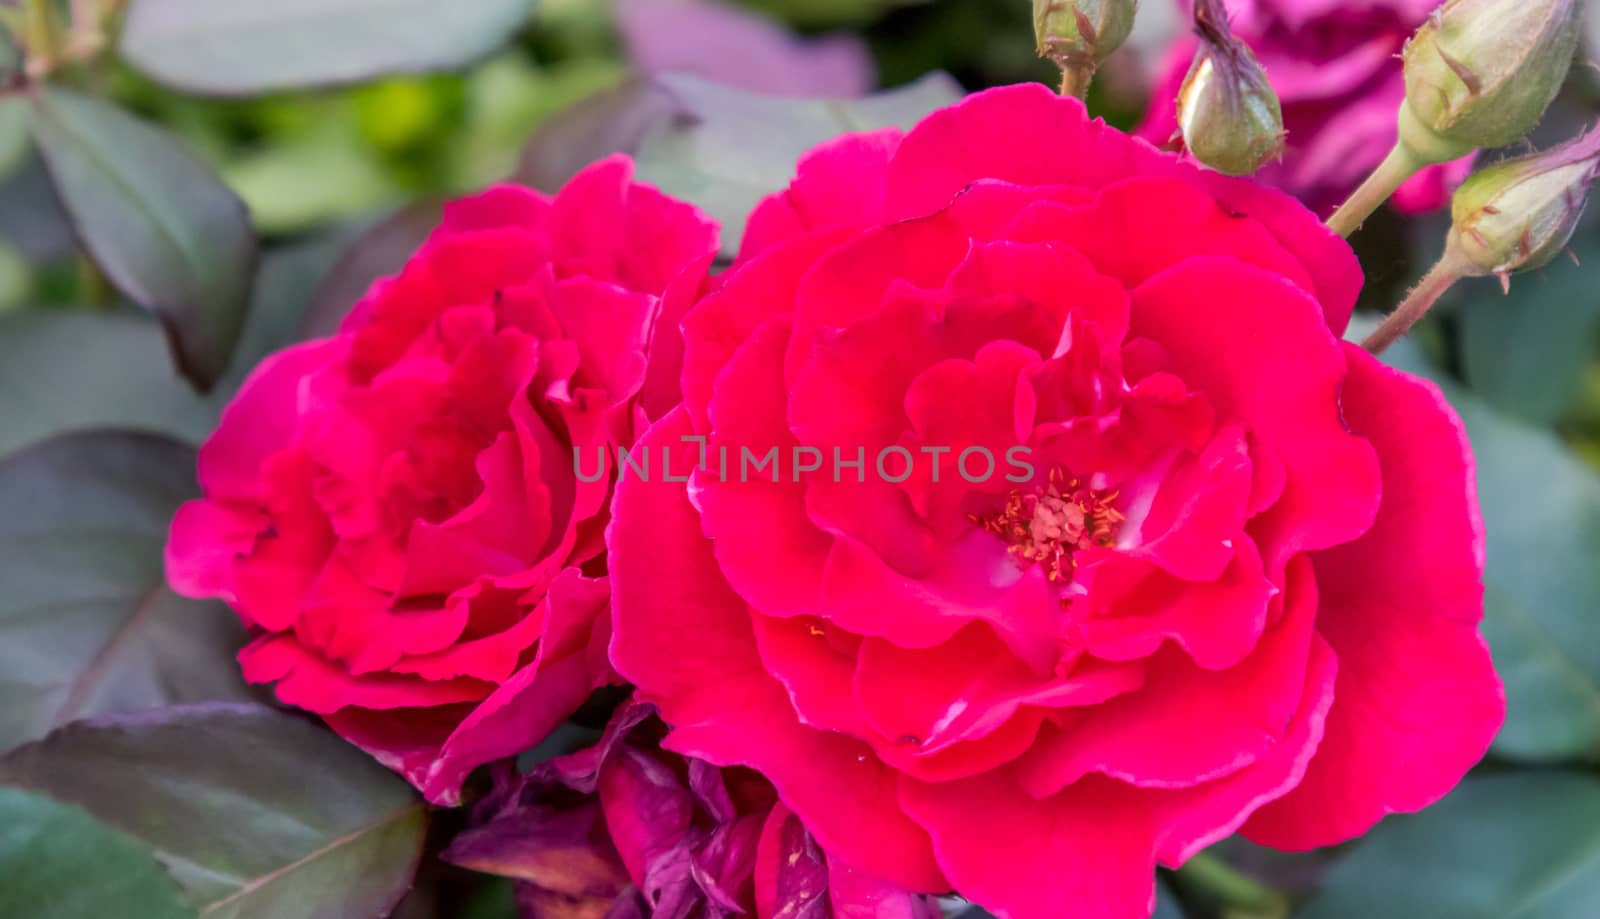 Closeup beautiful red rose in garden, selective focus and blur c by pt.pongsak@gmail.com